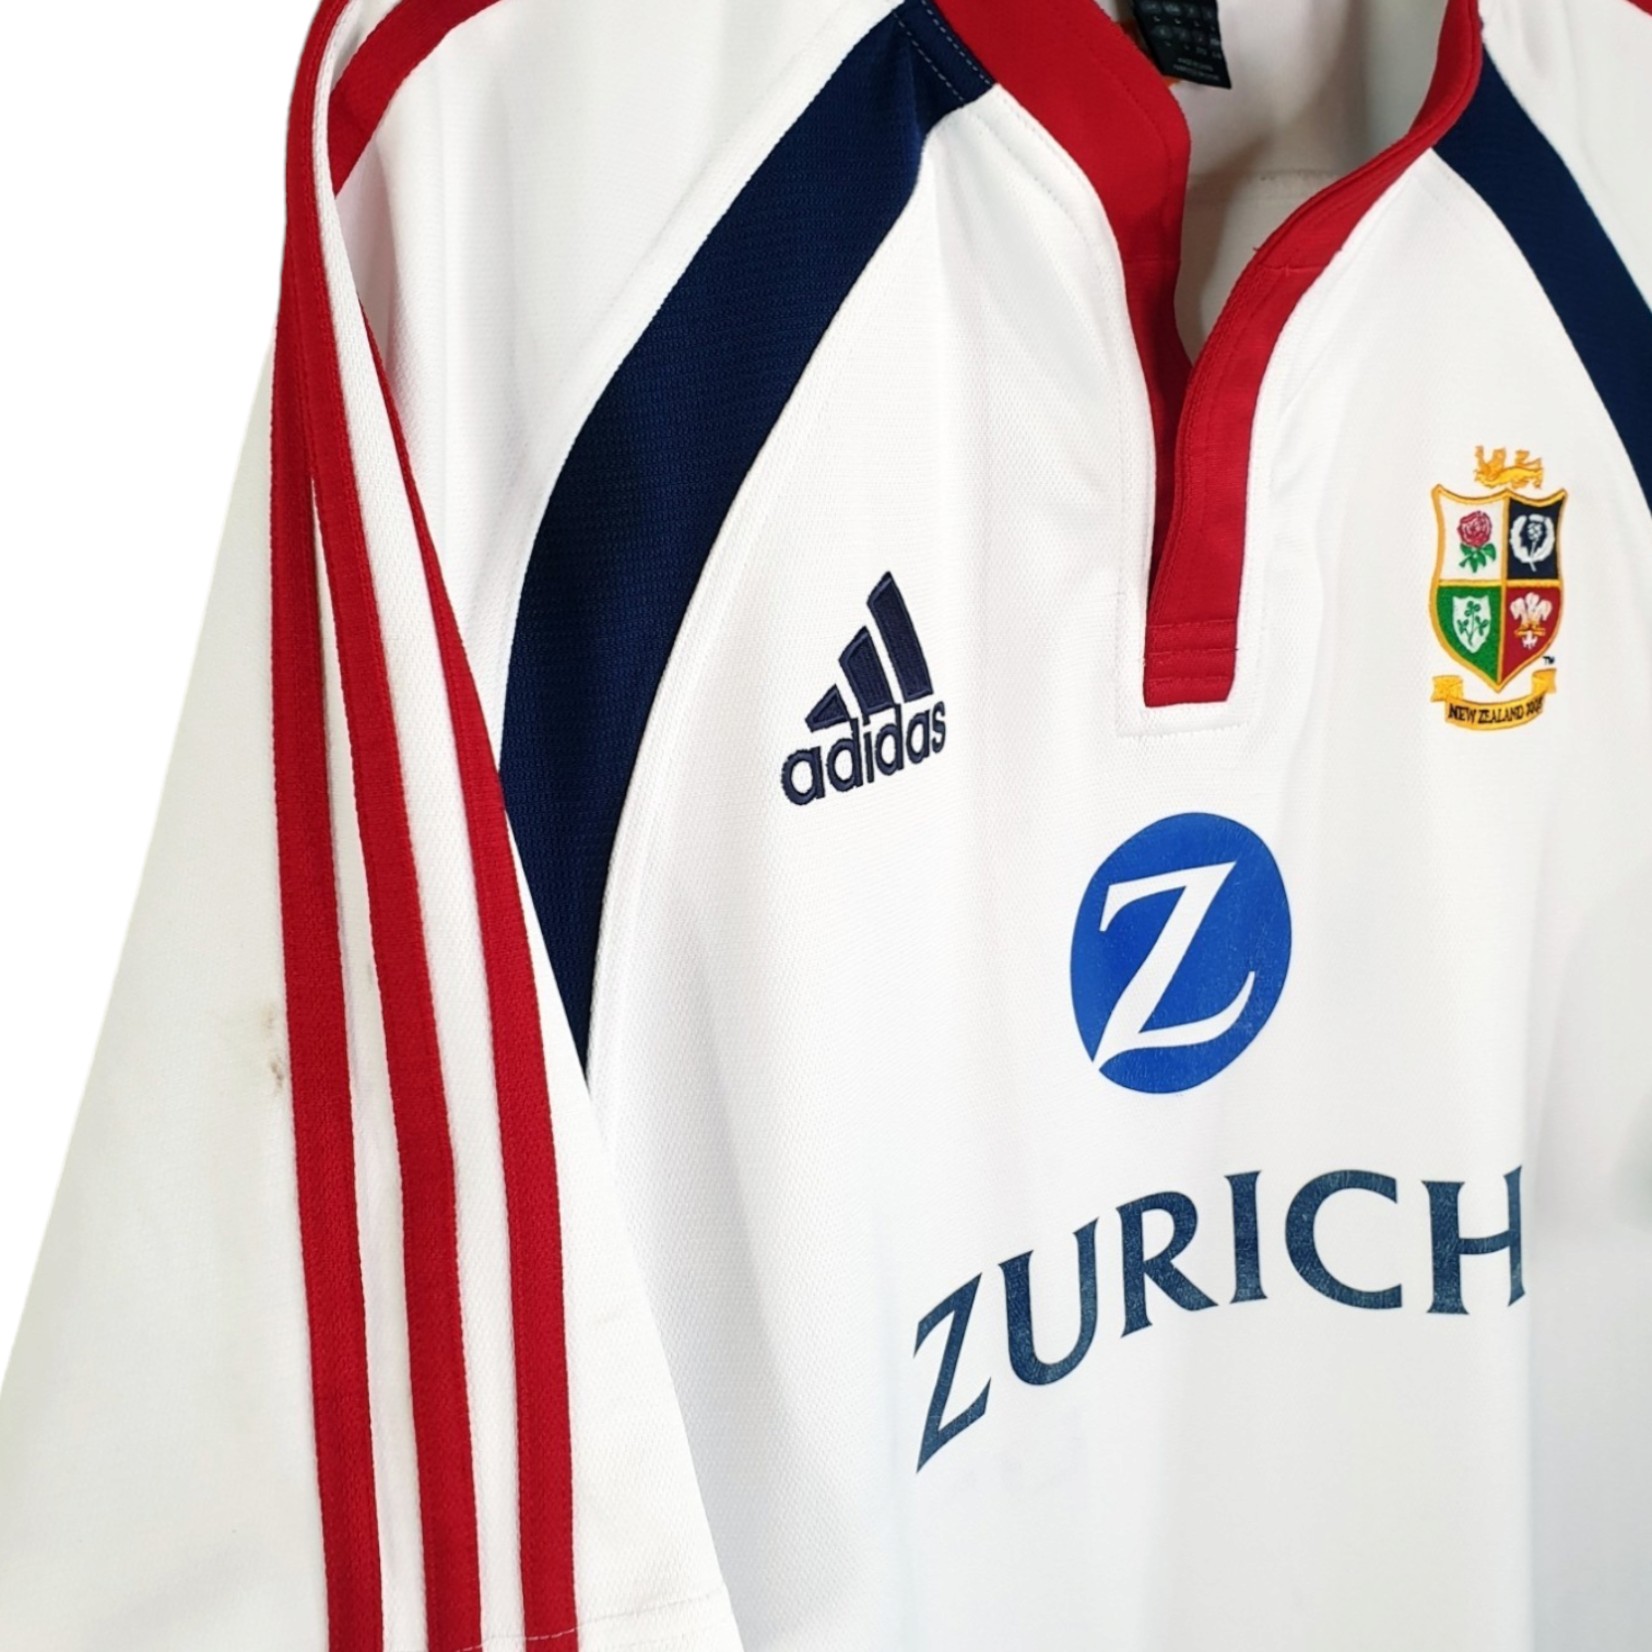 Adidas Adidas vintage rugby shirt British & Irish Lions 2005